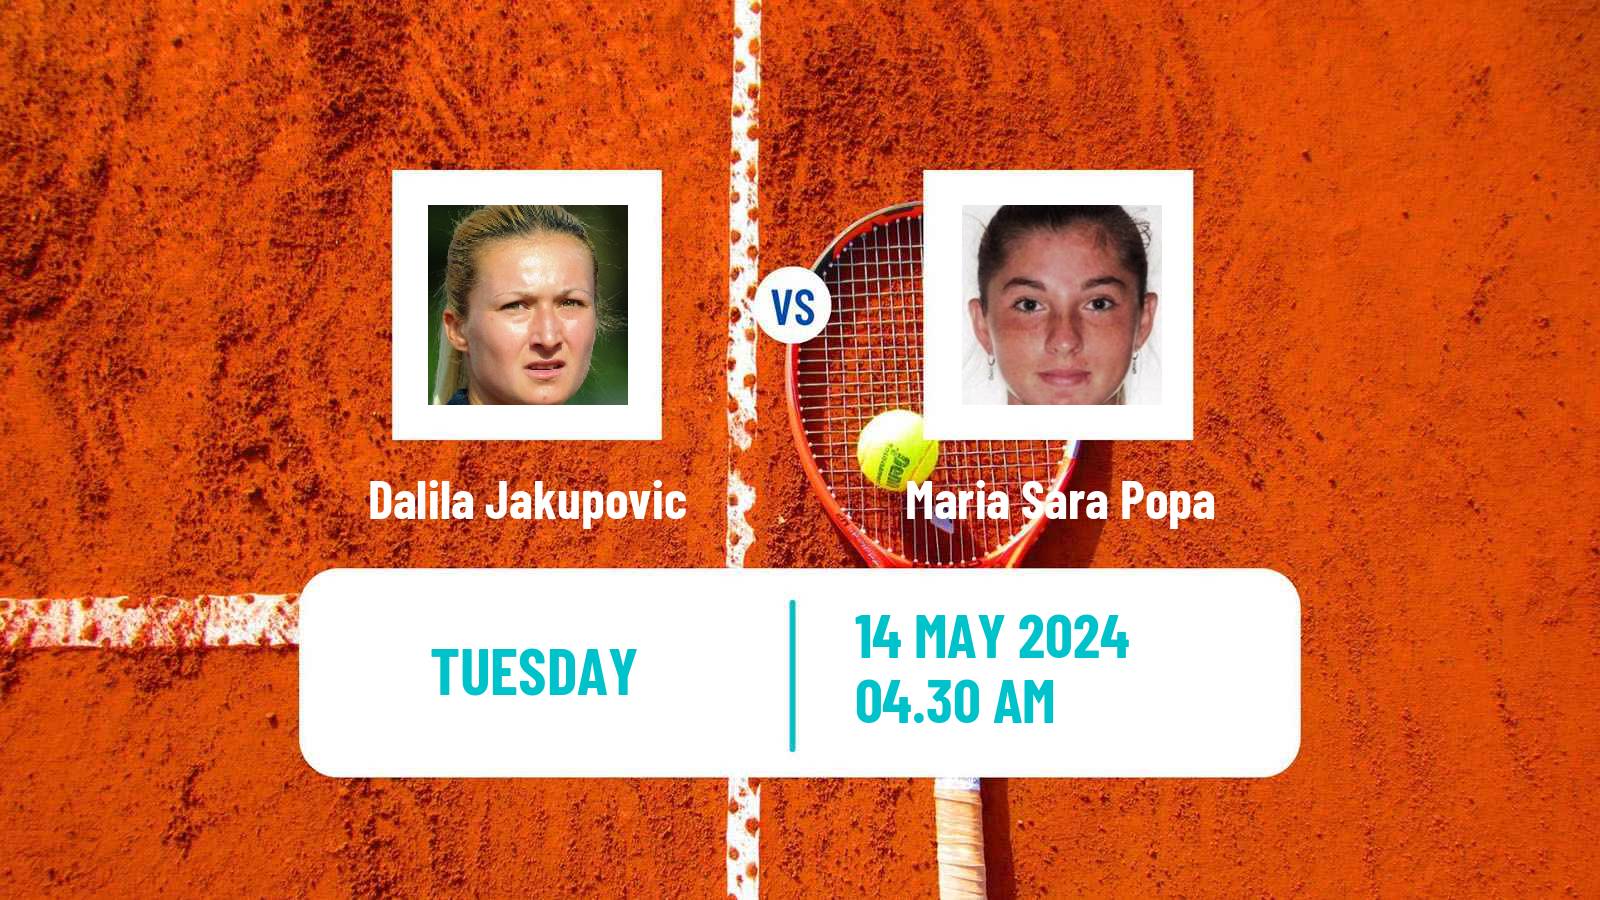 Tennis ITF W35 Villach Women Dalila Jakupovic - Maria Sara Popa